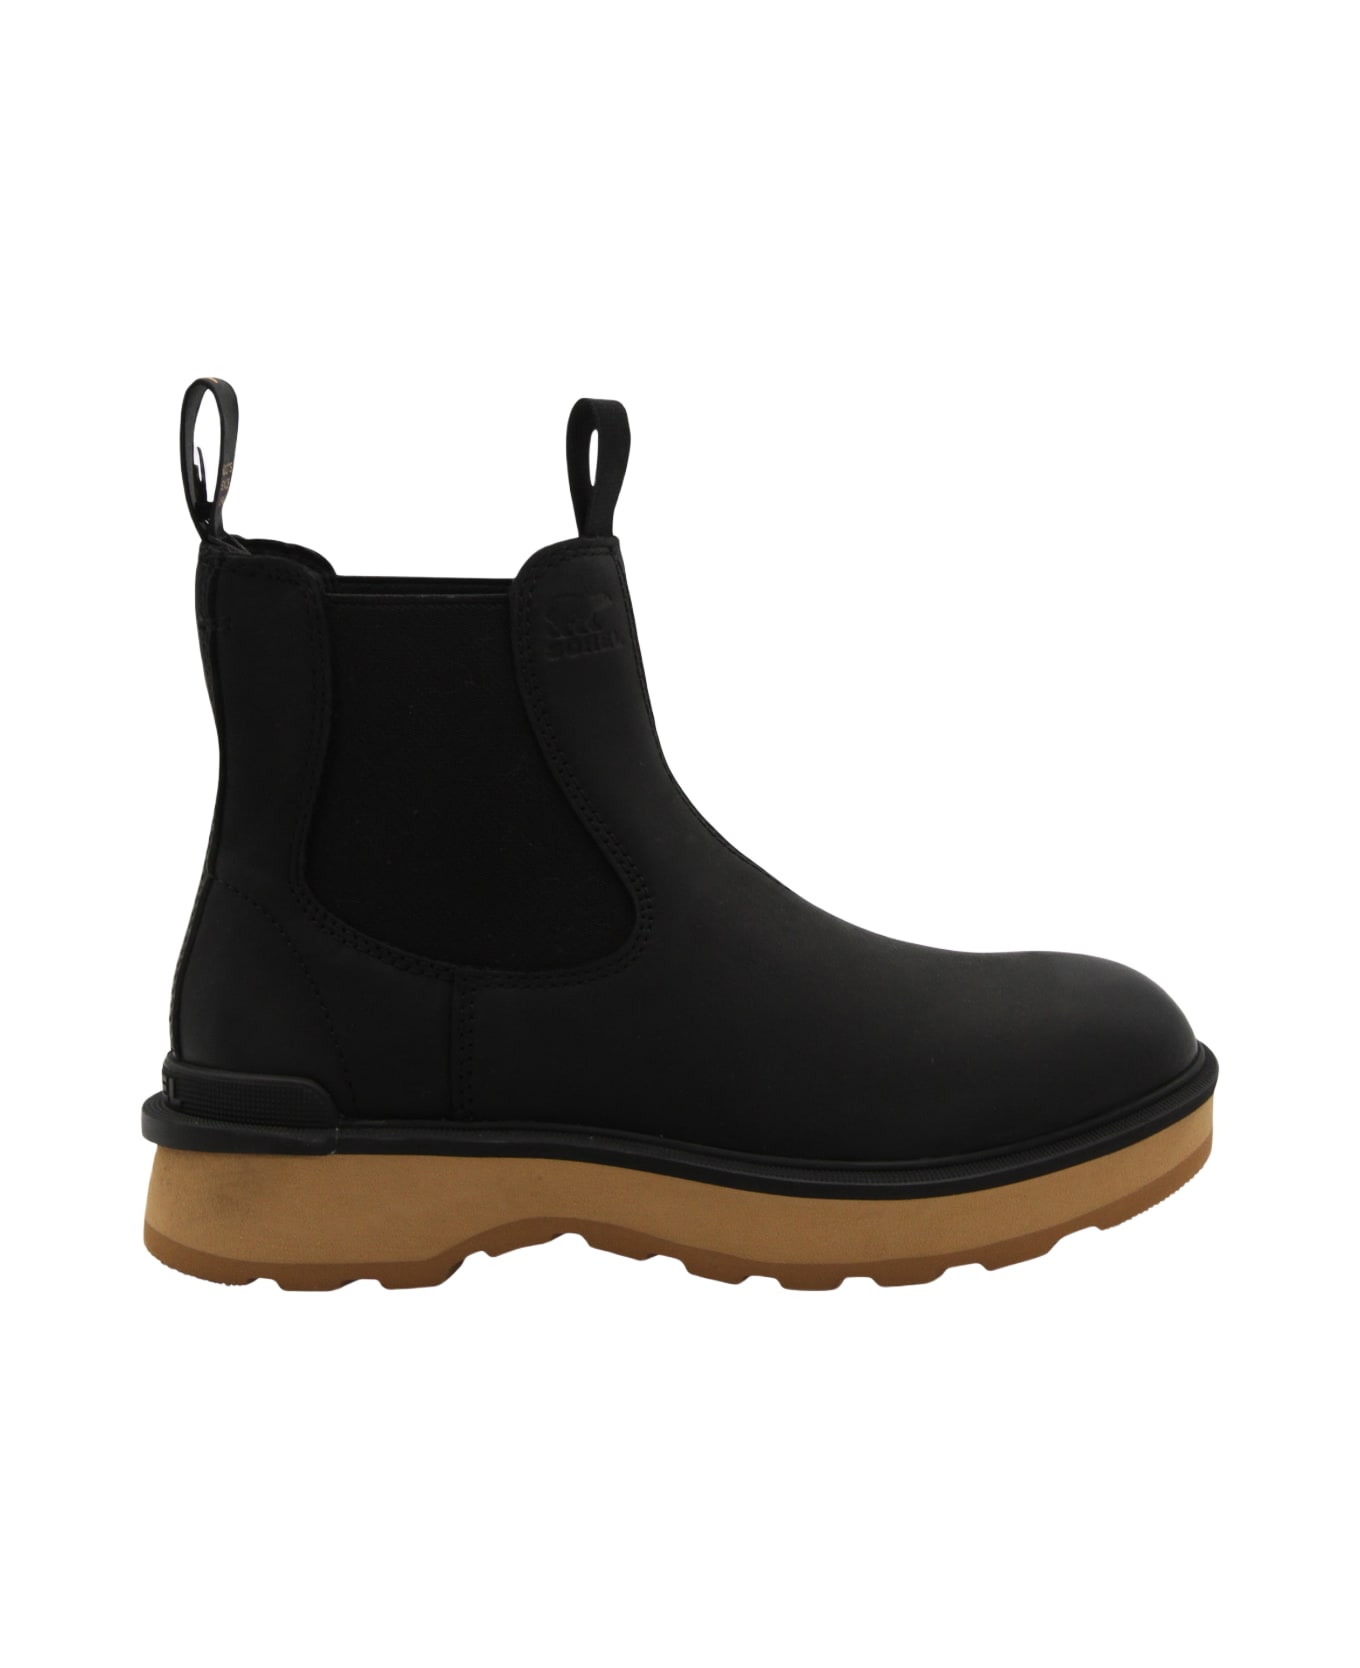 Sorel Black Leather Chelsea Boots - Black